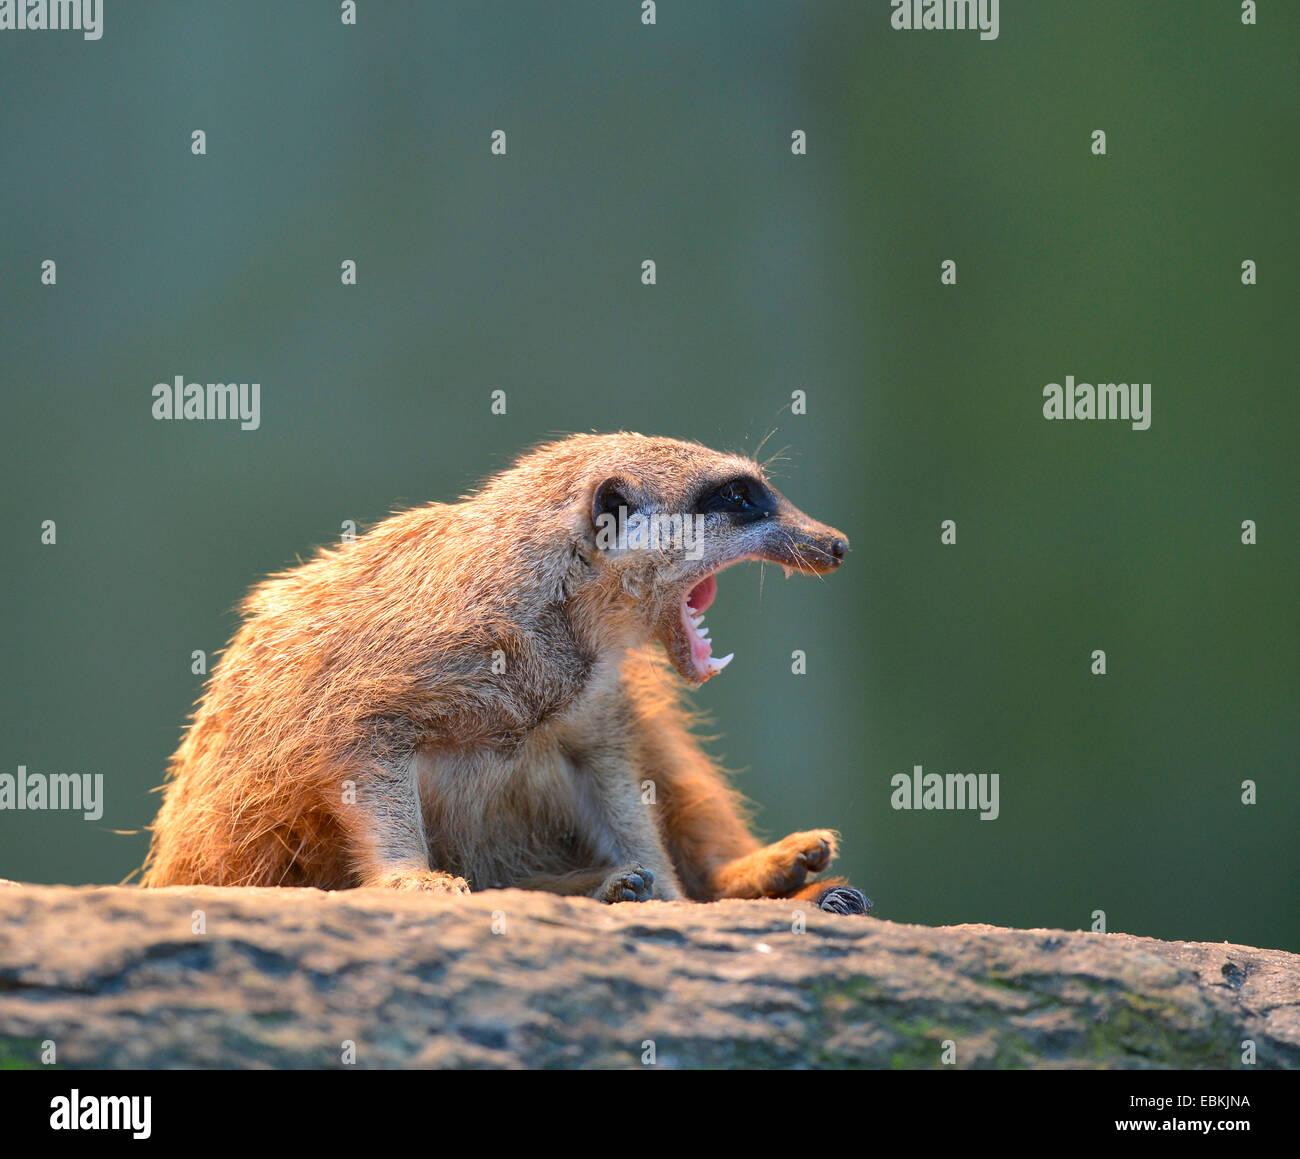 Suricate, sottile-tailed meerkat (Suricata suricatta), seduto su una pietra a sbadigliare Foto Stock